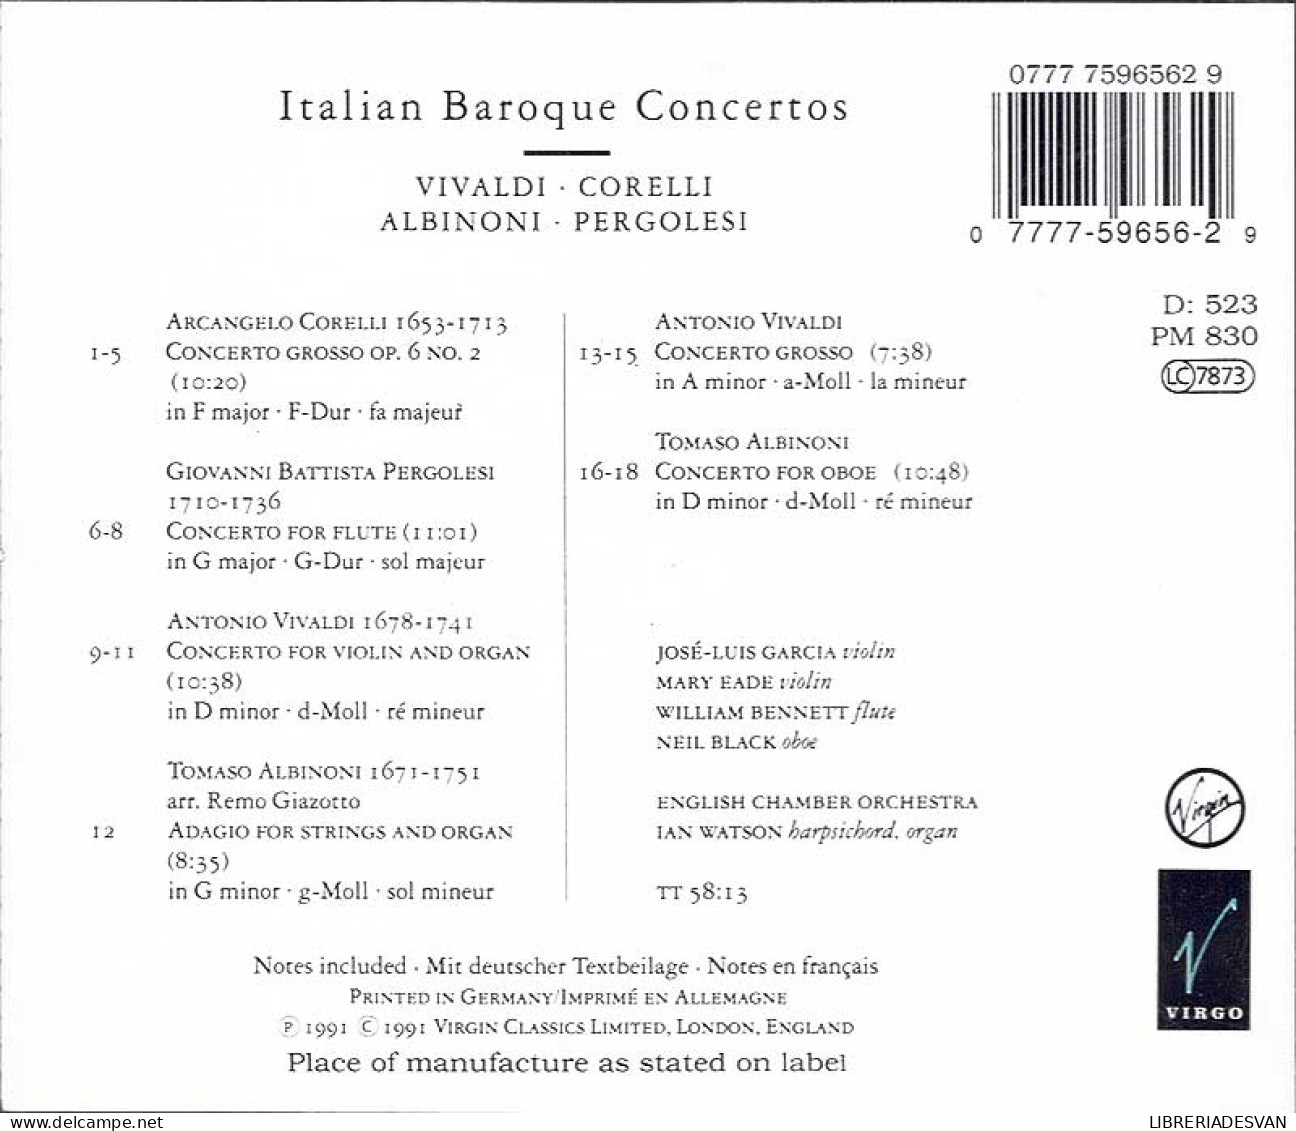 Vivaldi, Corelli, Albinoni, Pergolesi - Italian Baroque Concertos. CD - Classica